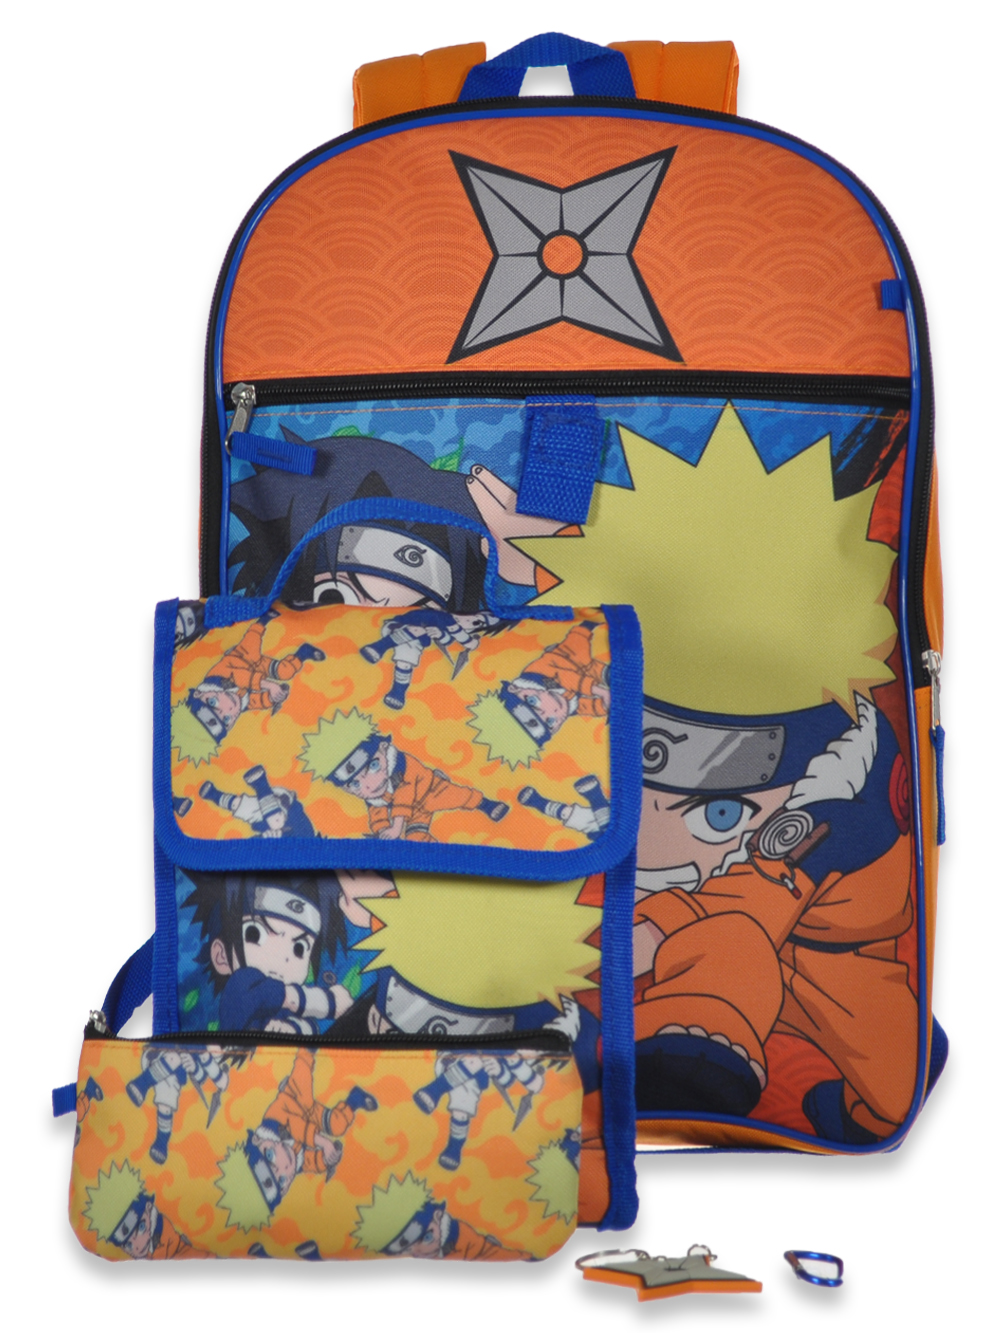 Naruto Boys' 5-Piece Backpack Lunchbox Set - Orange/Multi, One Size